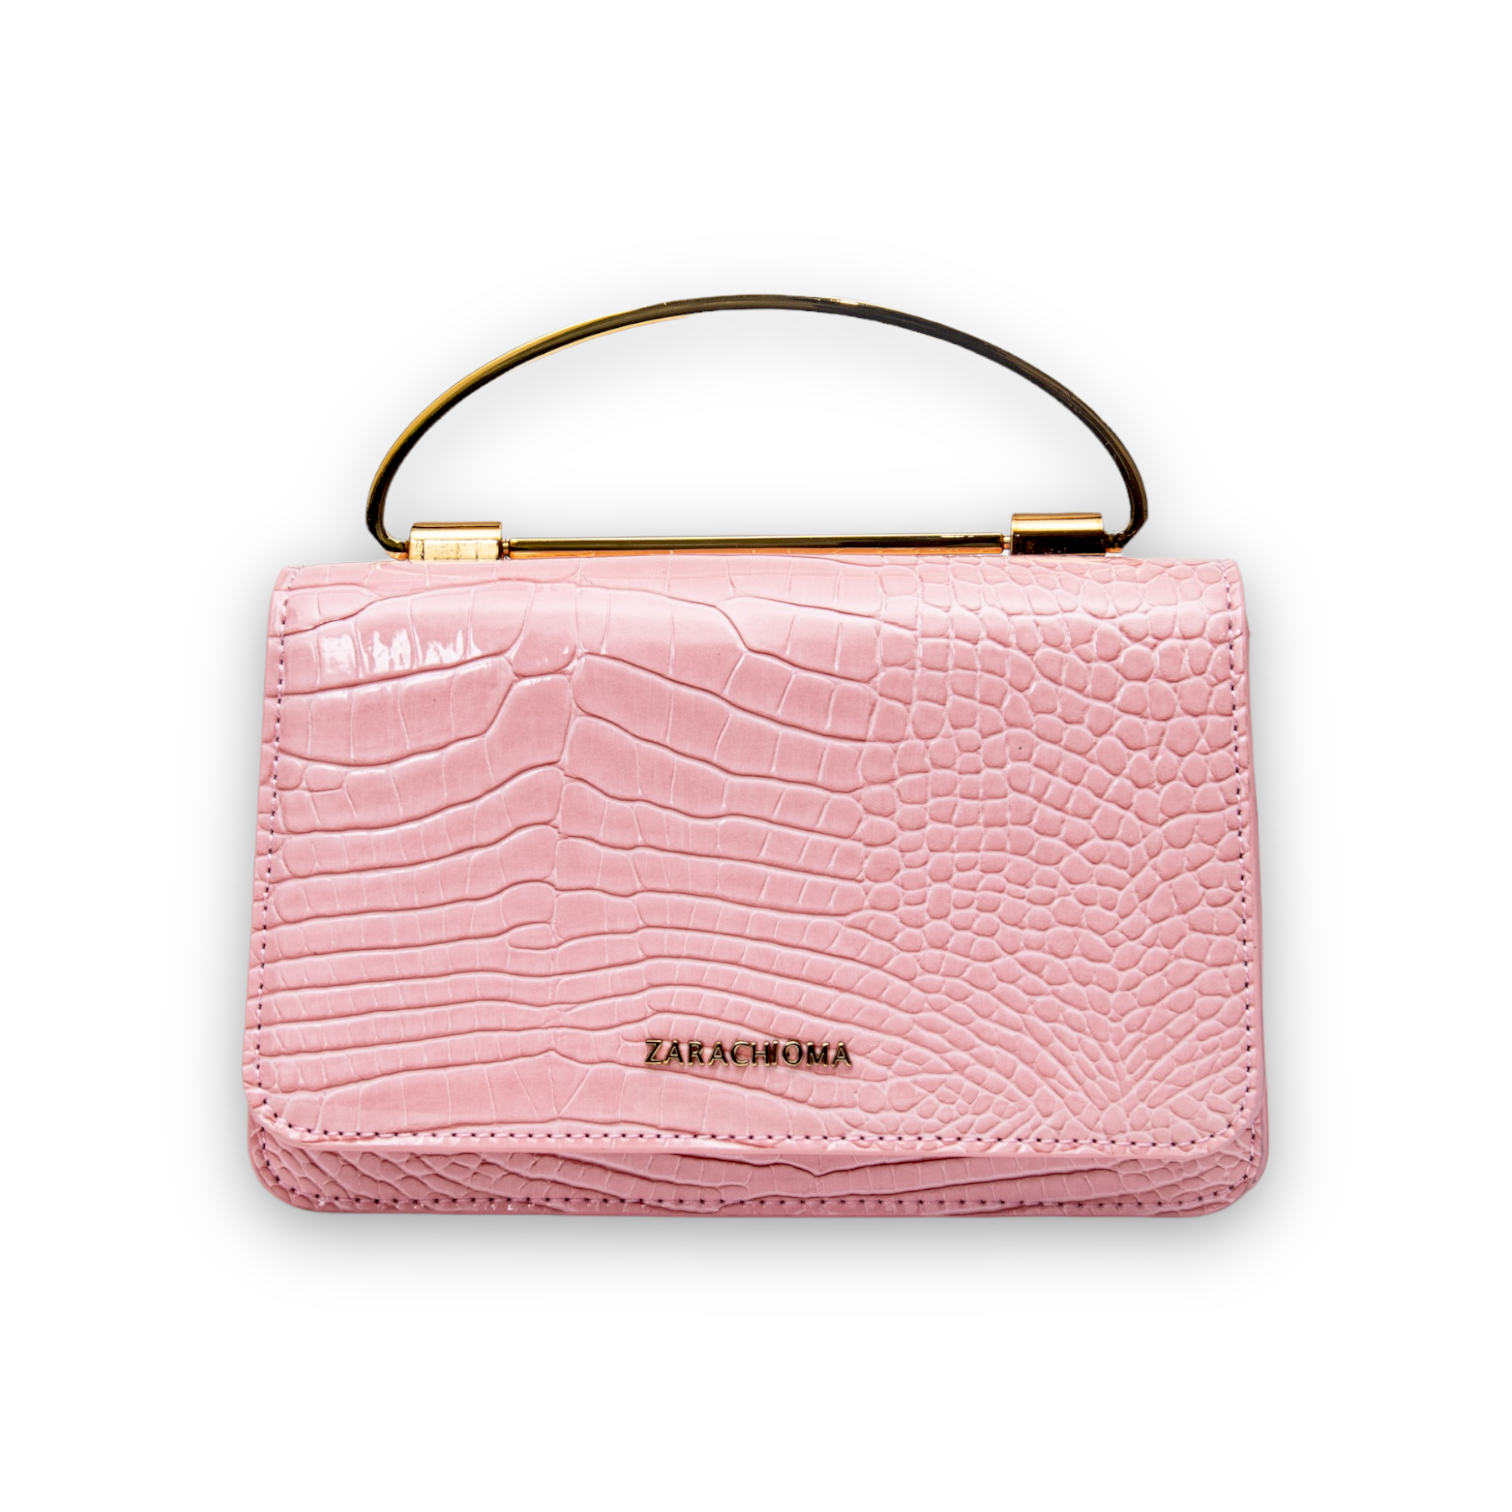 bubble gum pink croc embossed top handle mini hand bag